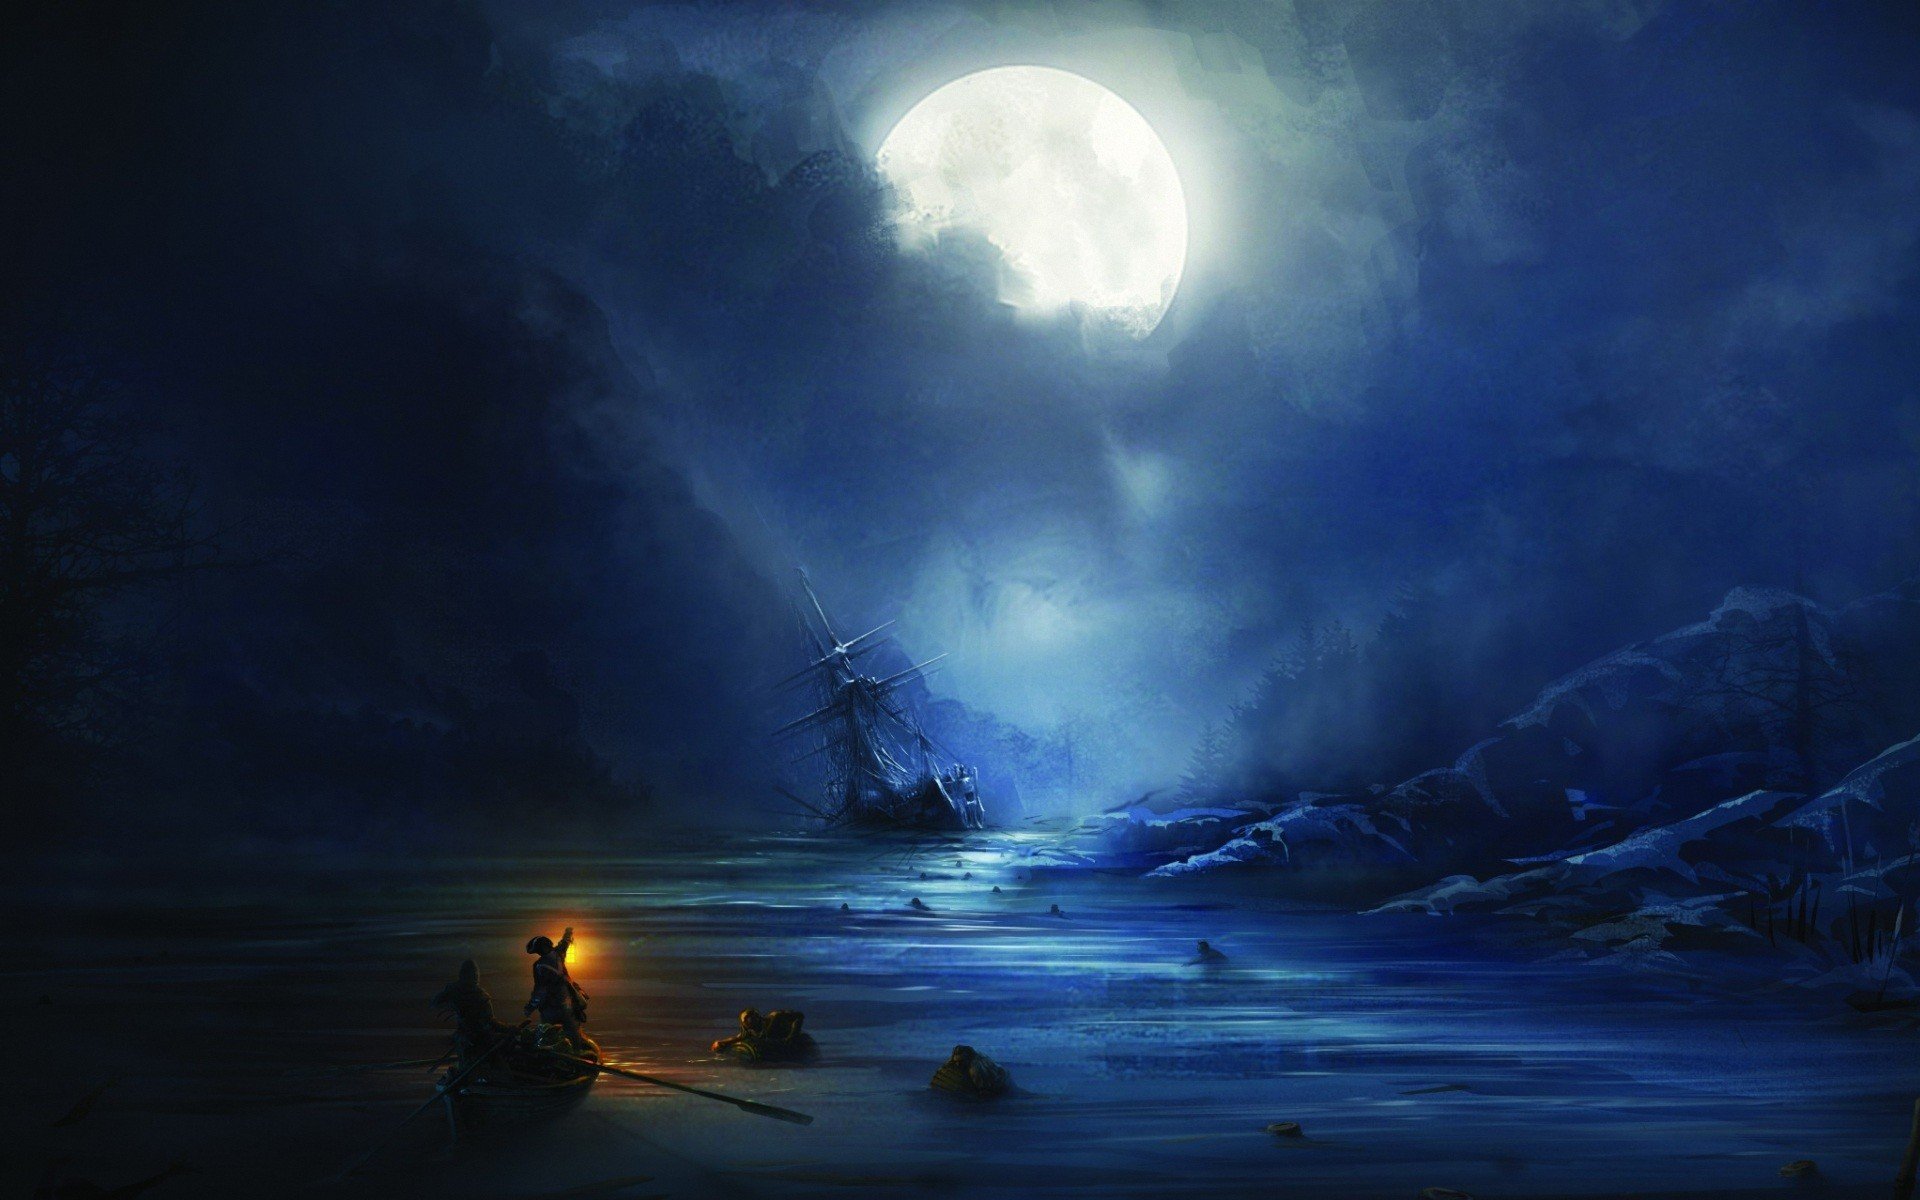 artwork, Concept art, Boat, Ship, Sailing ship, Sea, Moon, Moonlight